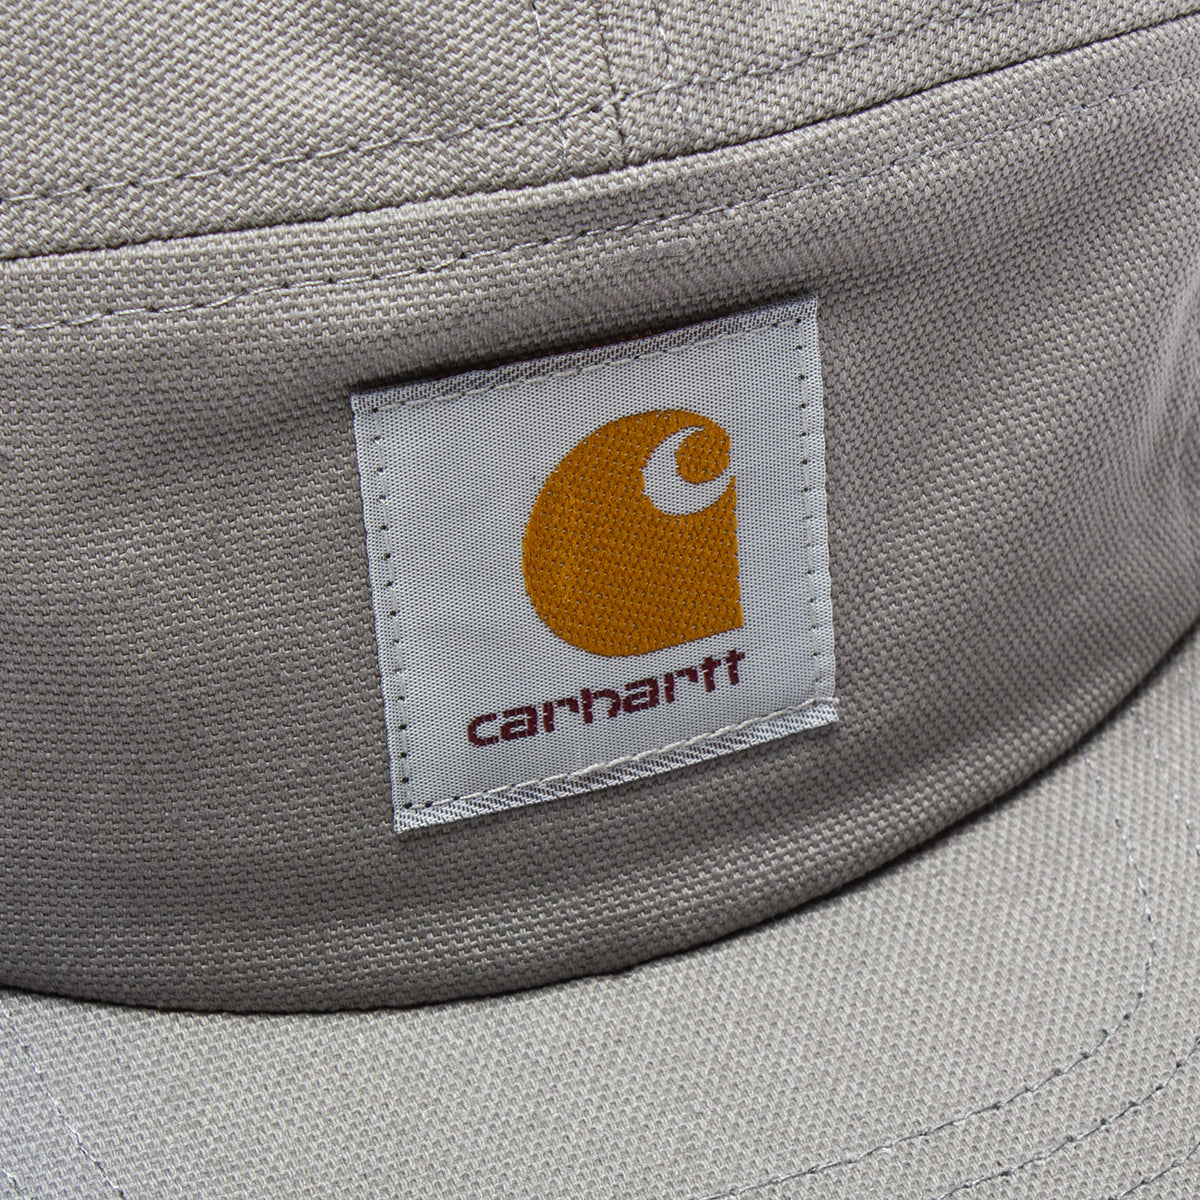 Carhartt WIP | Backley Cap  Style # I016607-0WF Color : Marengo